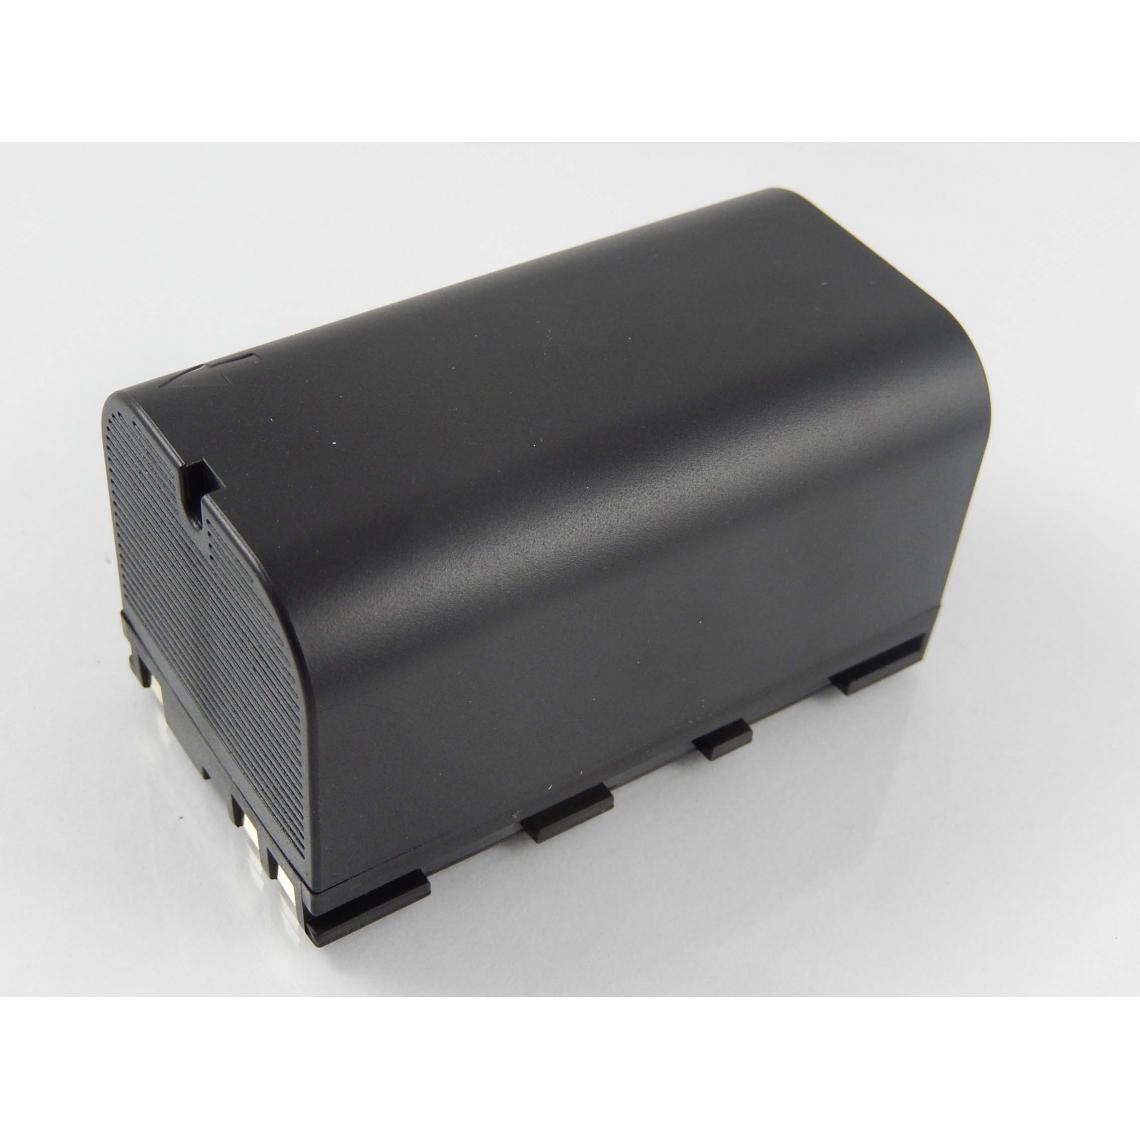 Vhbw - vhbw Batterie compatible avec Leica TC407, TC802, TC803, TC805 dispositif de mesure laser, outil de mesure (5600mAh, 7,4V, Li-ion) - Piles rechargeables